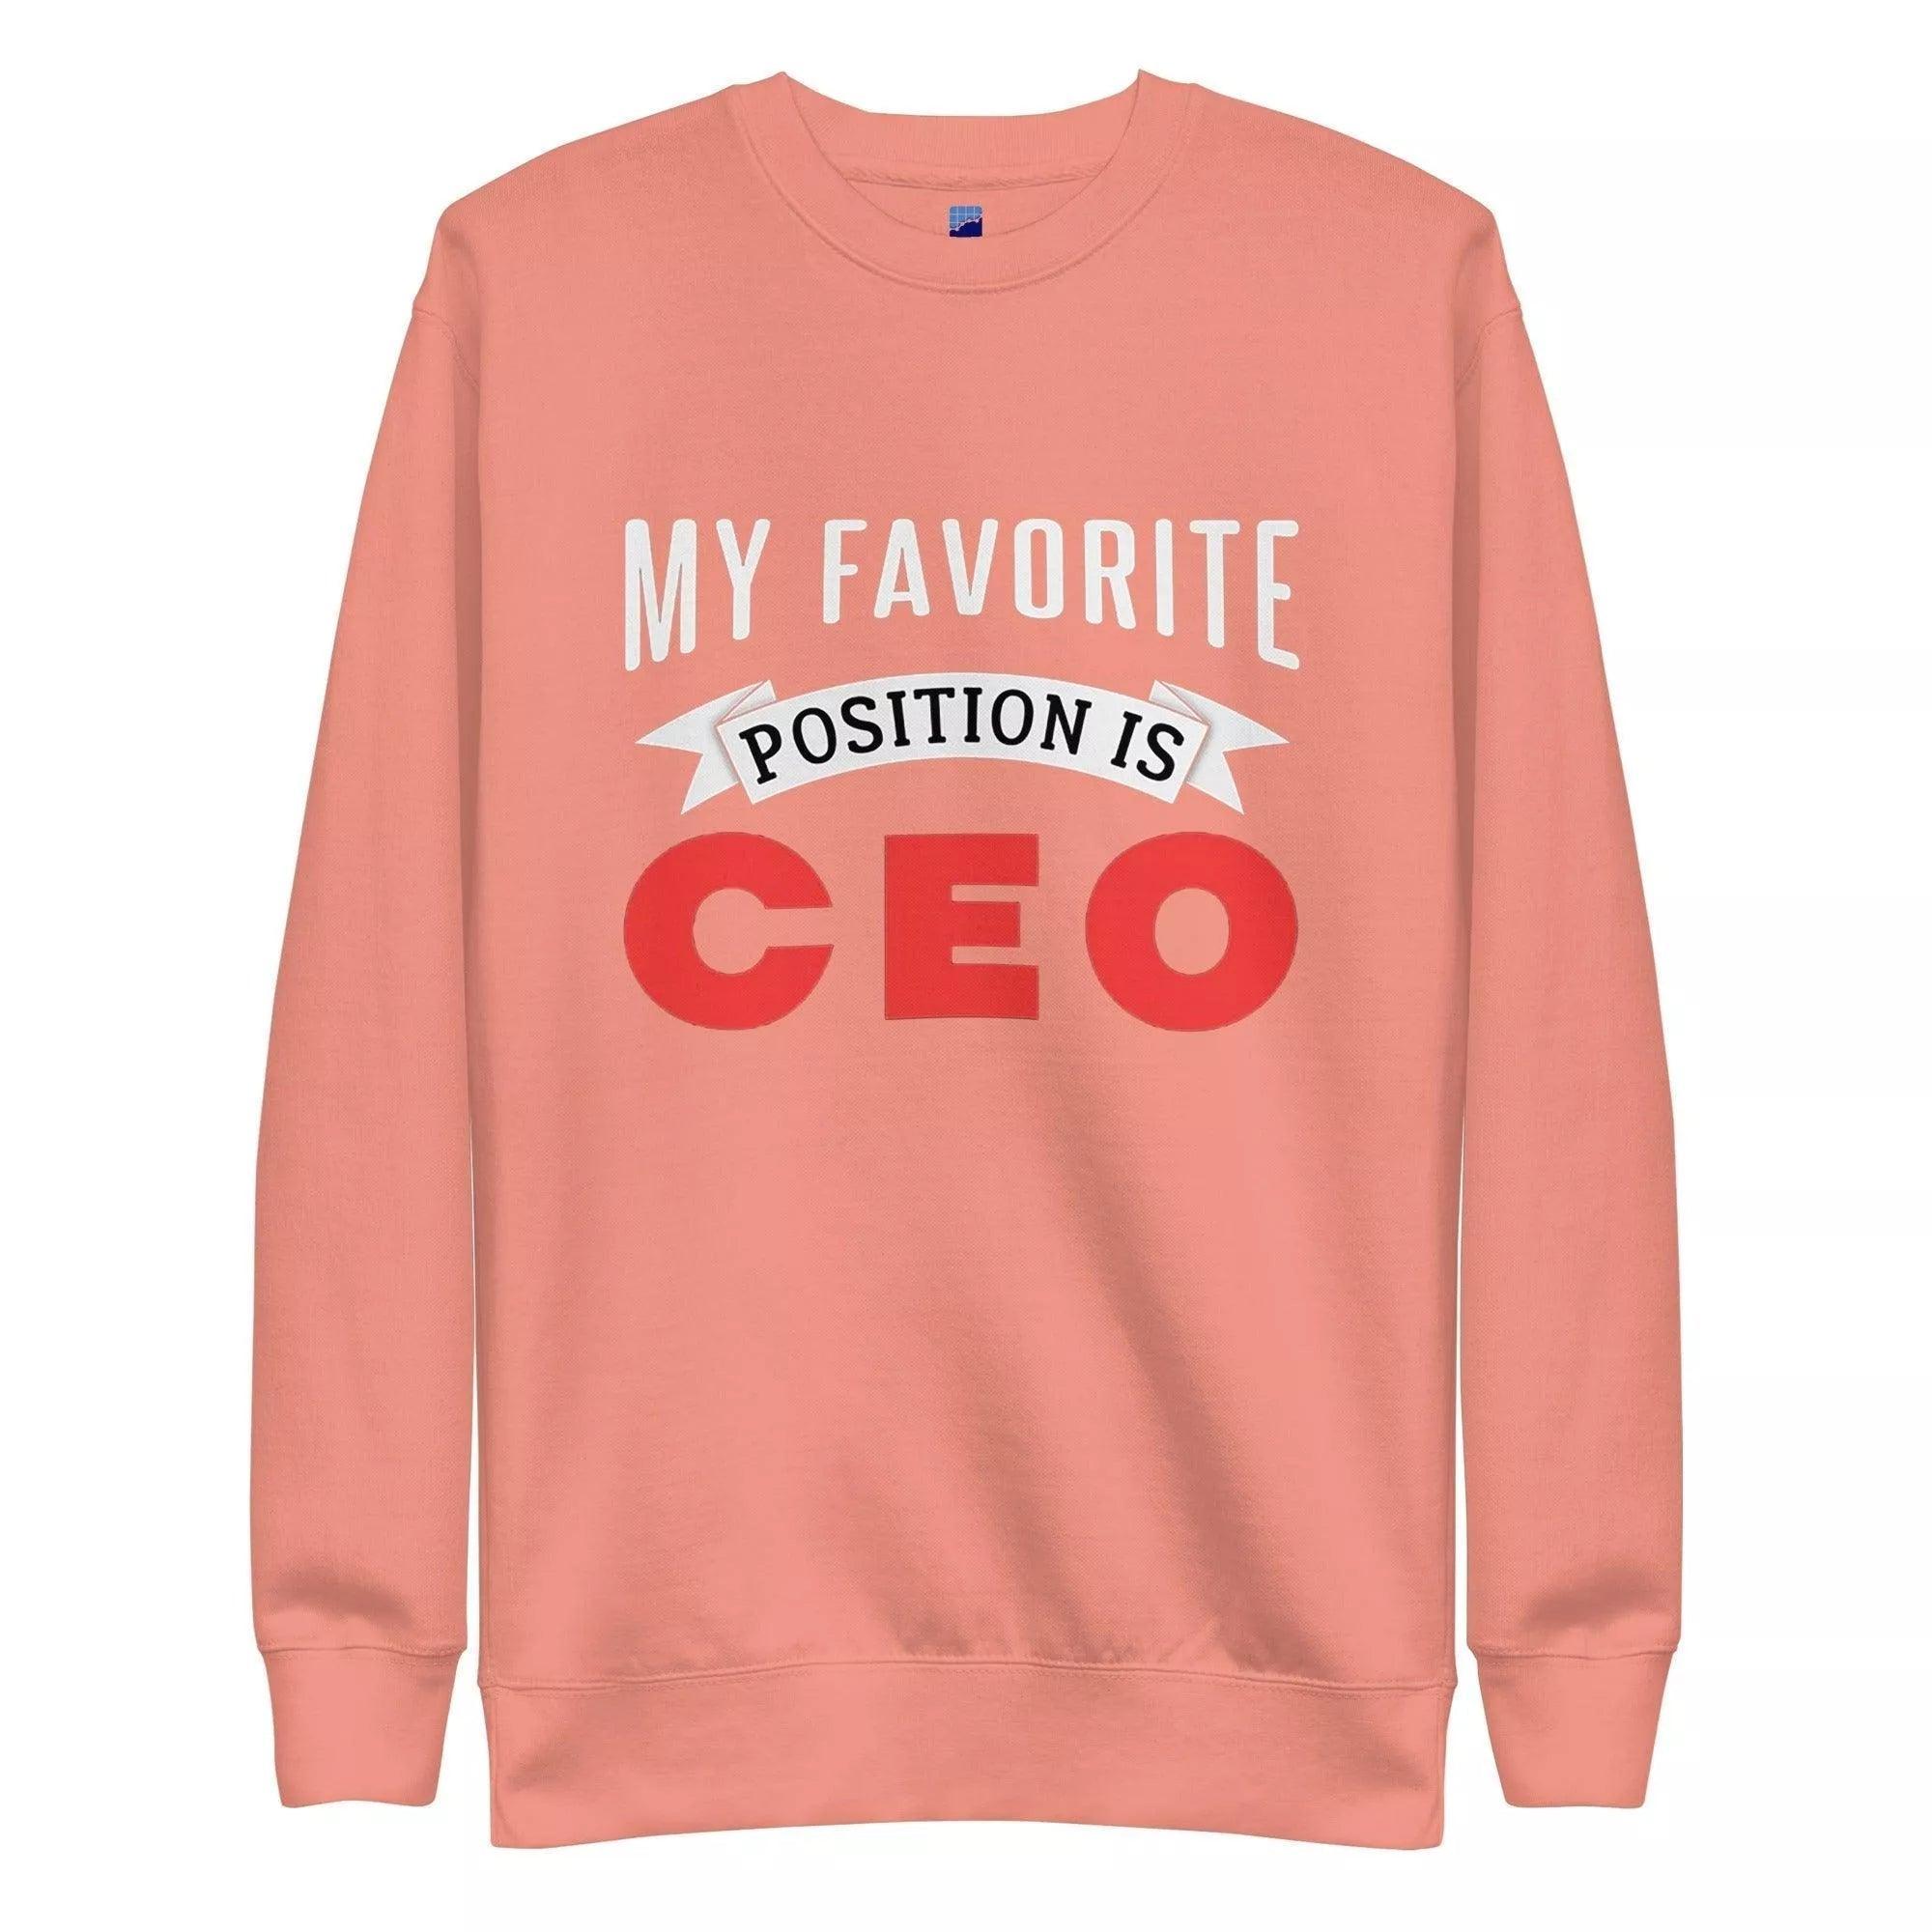 Favorite Position Is CEO Sweatshirt - InvestmenTees